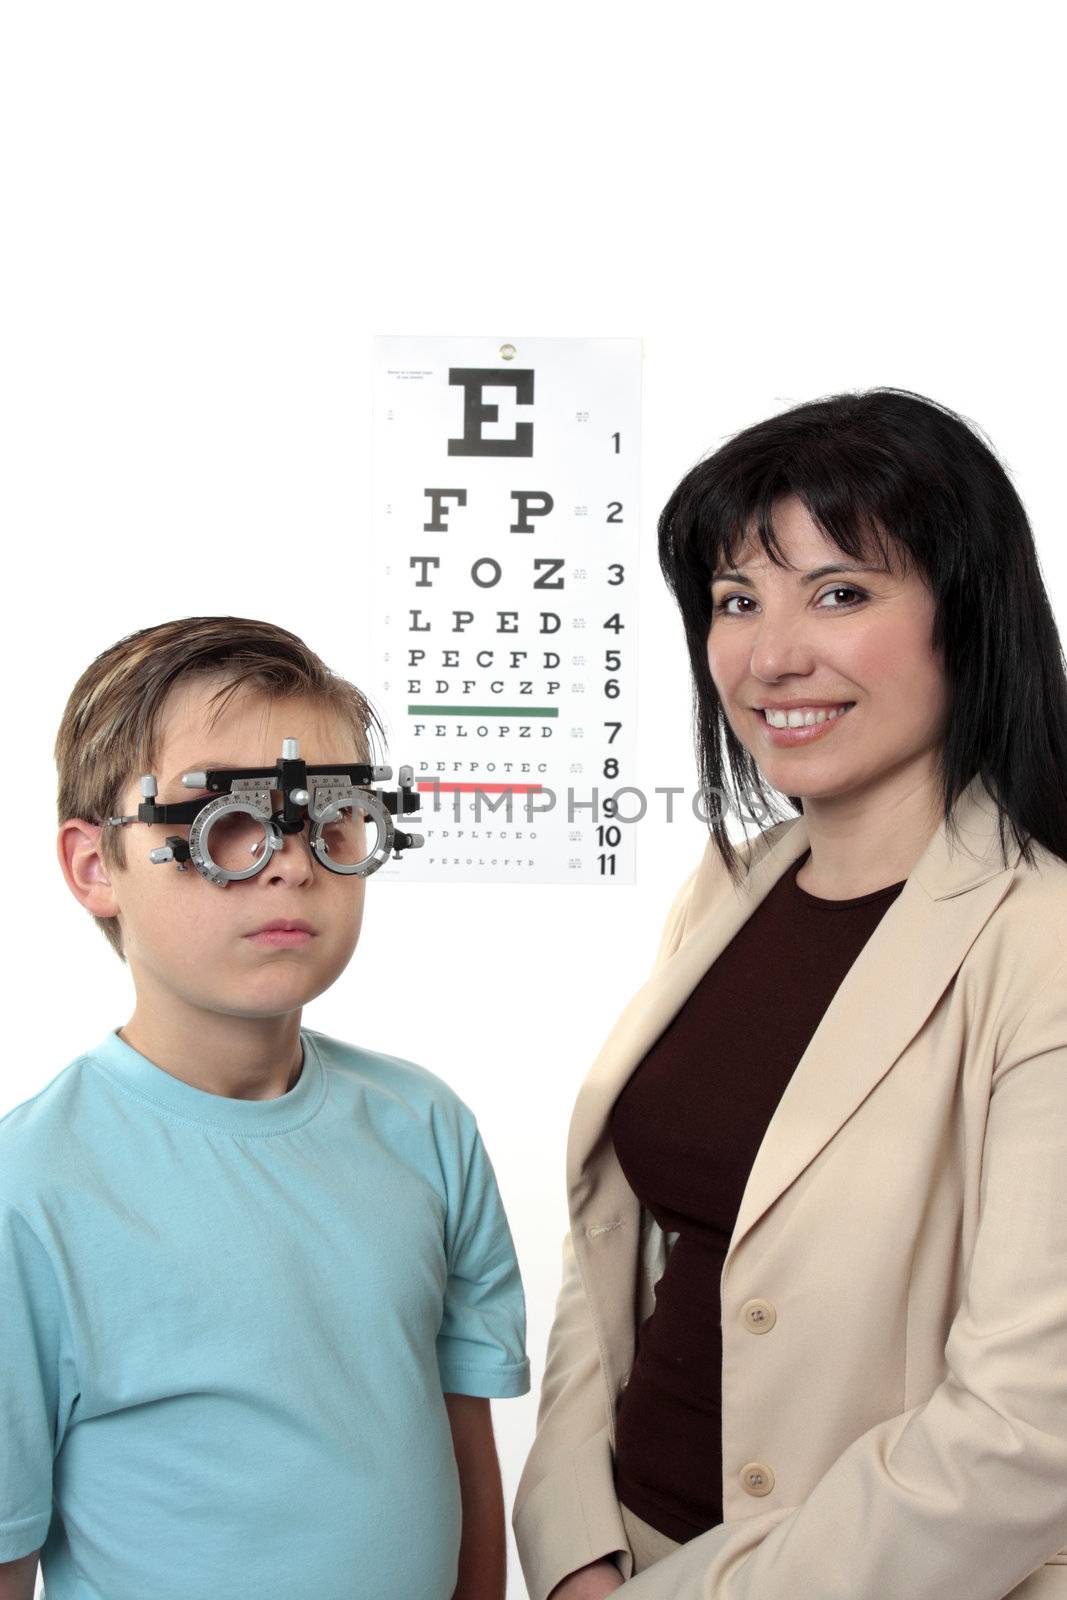 Optometstrist  eye examination by lovleah